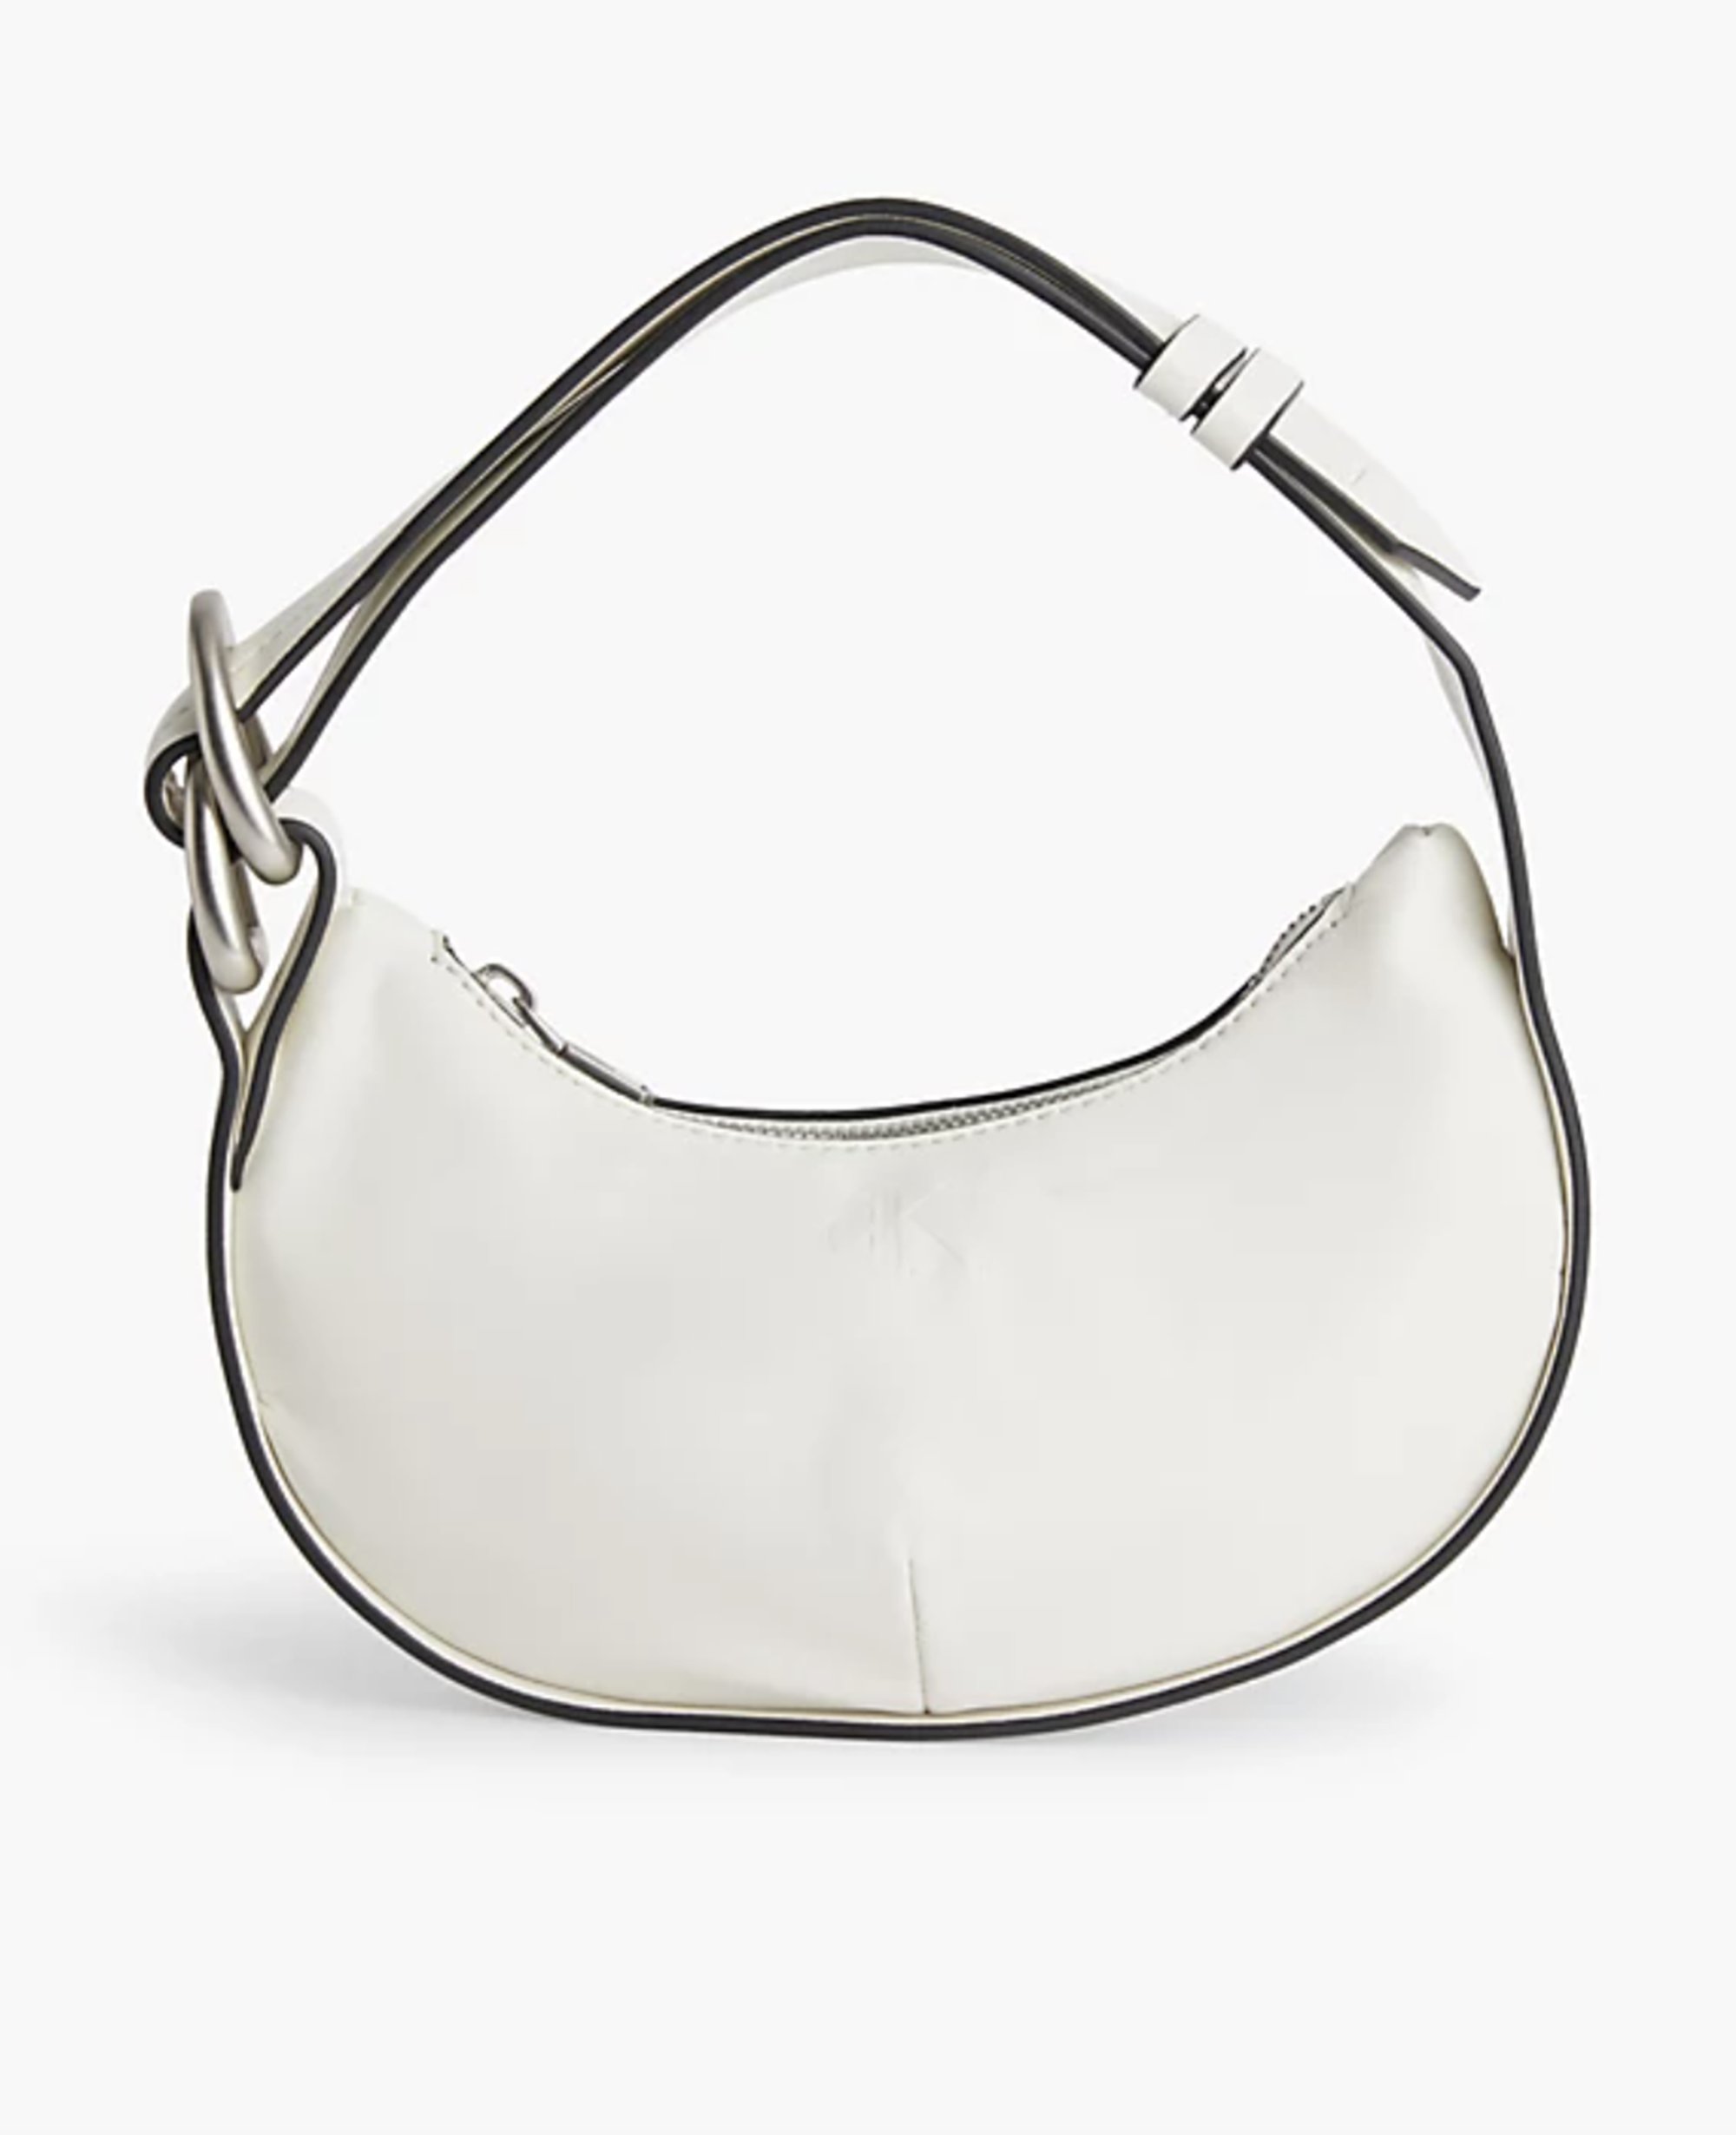 High street handbags that look like Prada bag dupes - The Mail